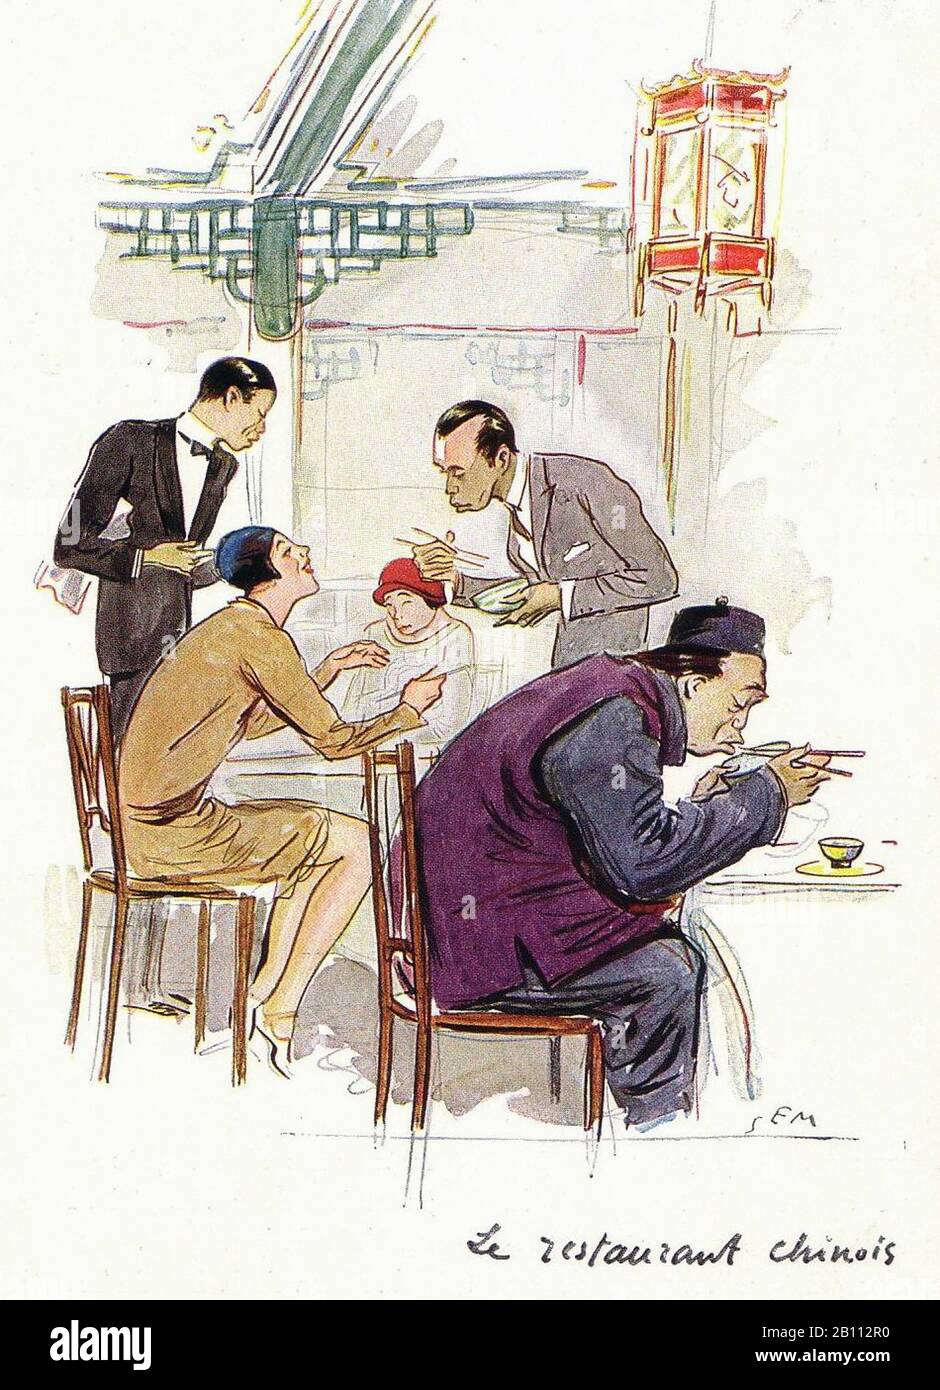 Le Restaurant chinois - Illustrazione di SEM (Georges Goursat 1863–1934) Foto Stock